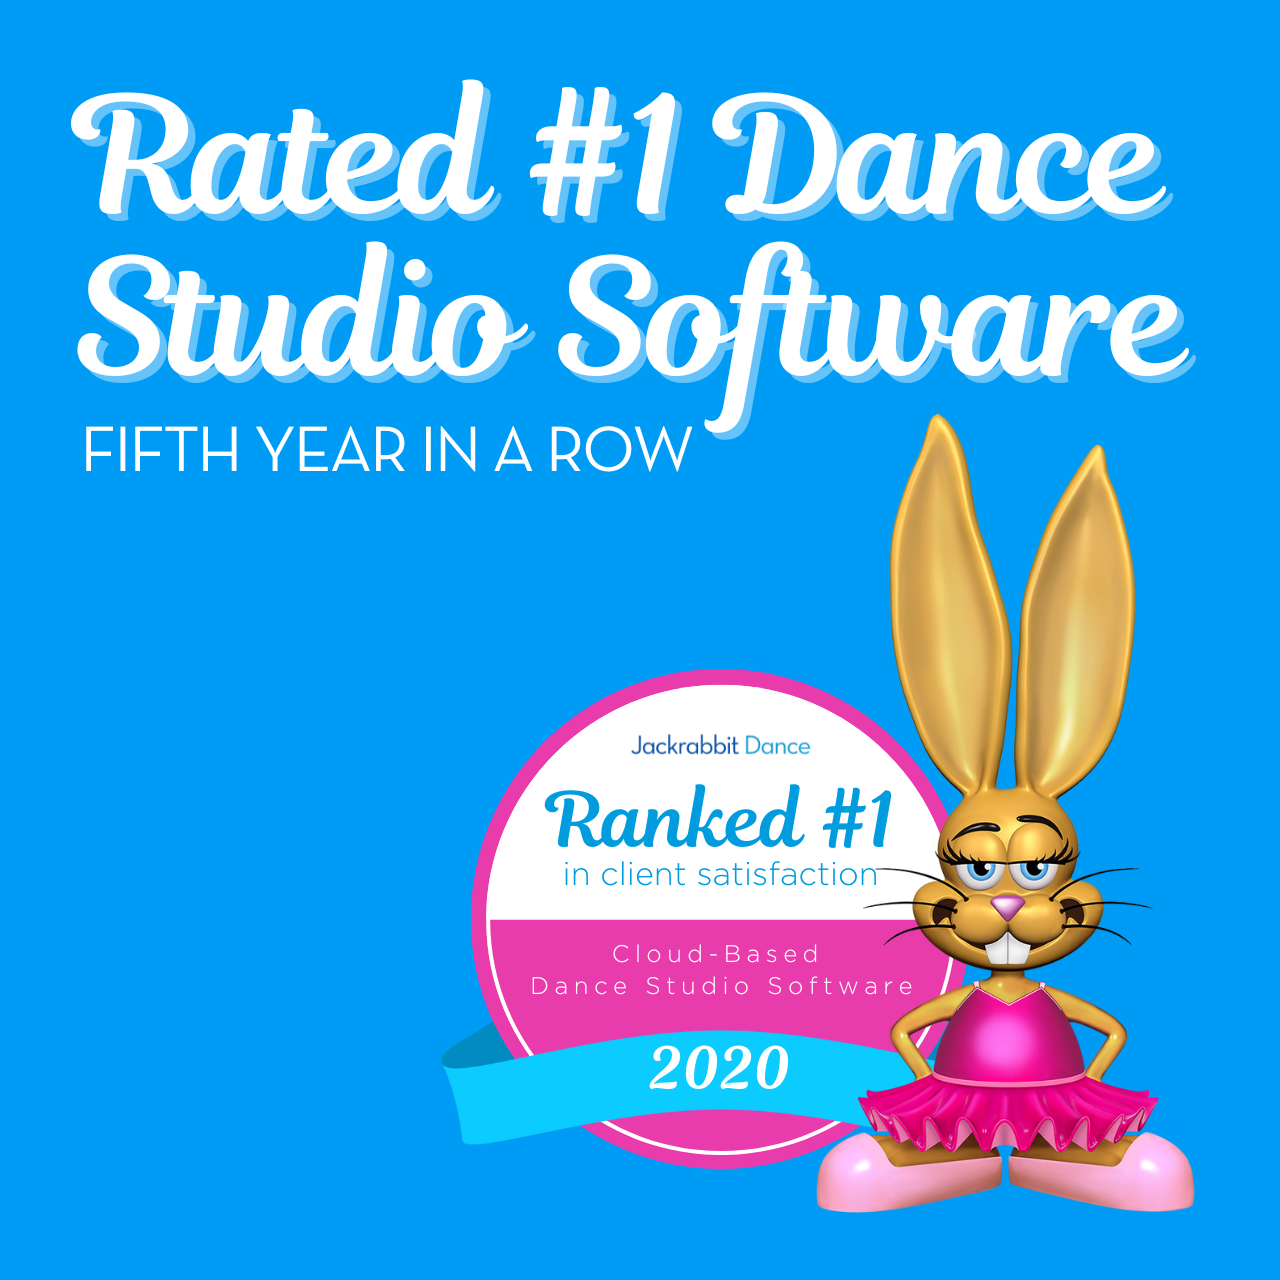 TutuTix’s Dance Studio Software Reviews Ranks Jackrabbit Technologies #1 for 5th Year